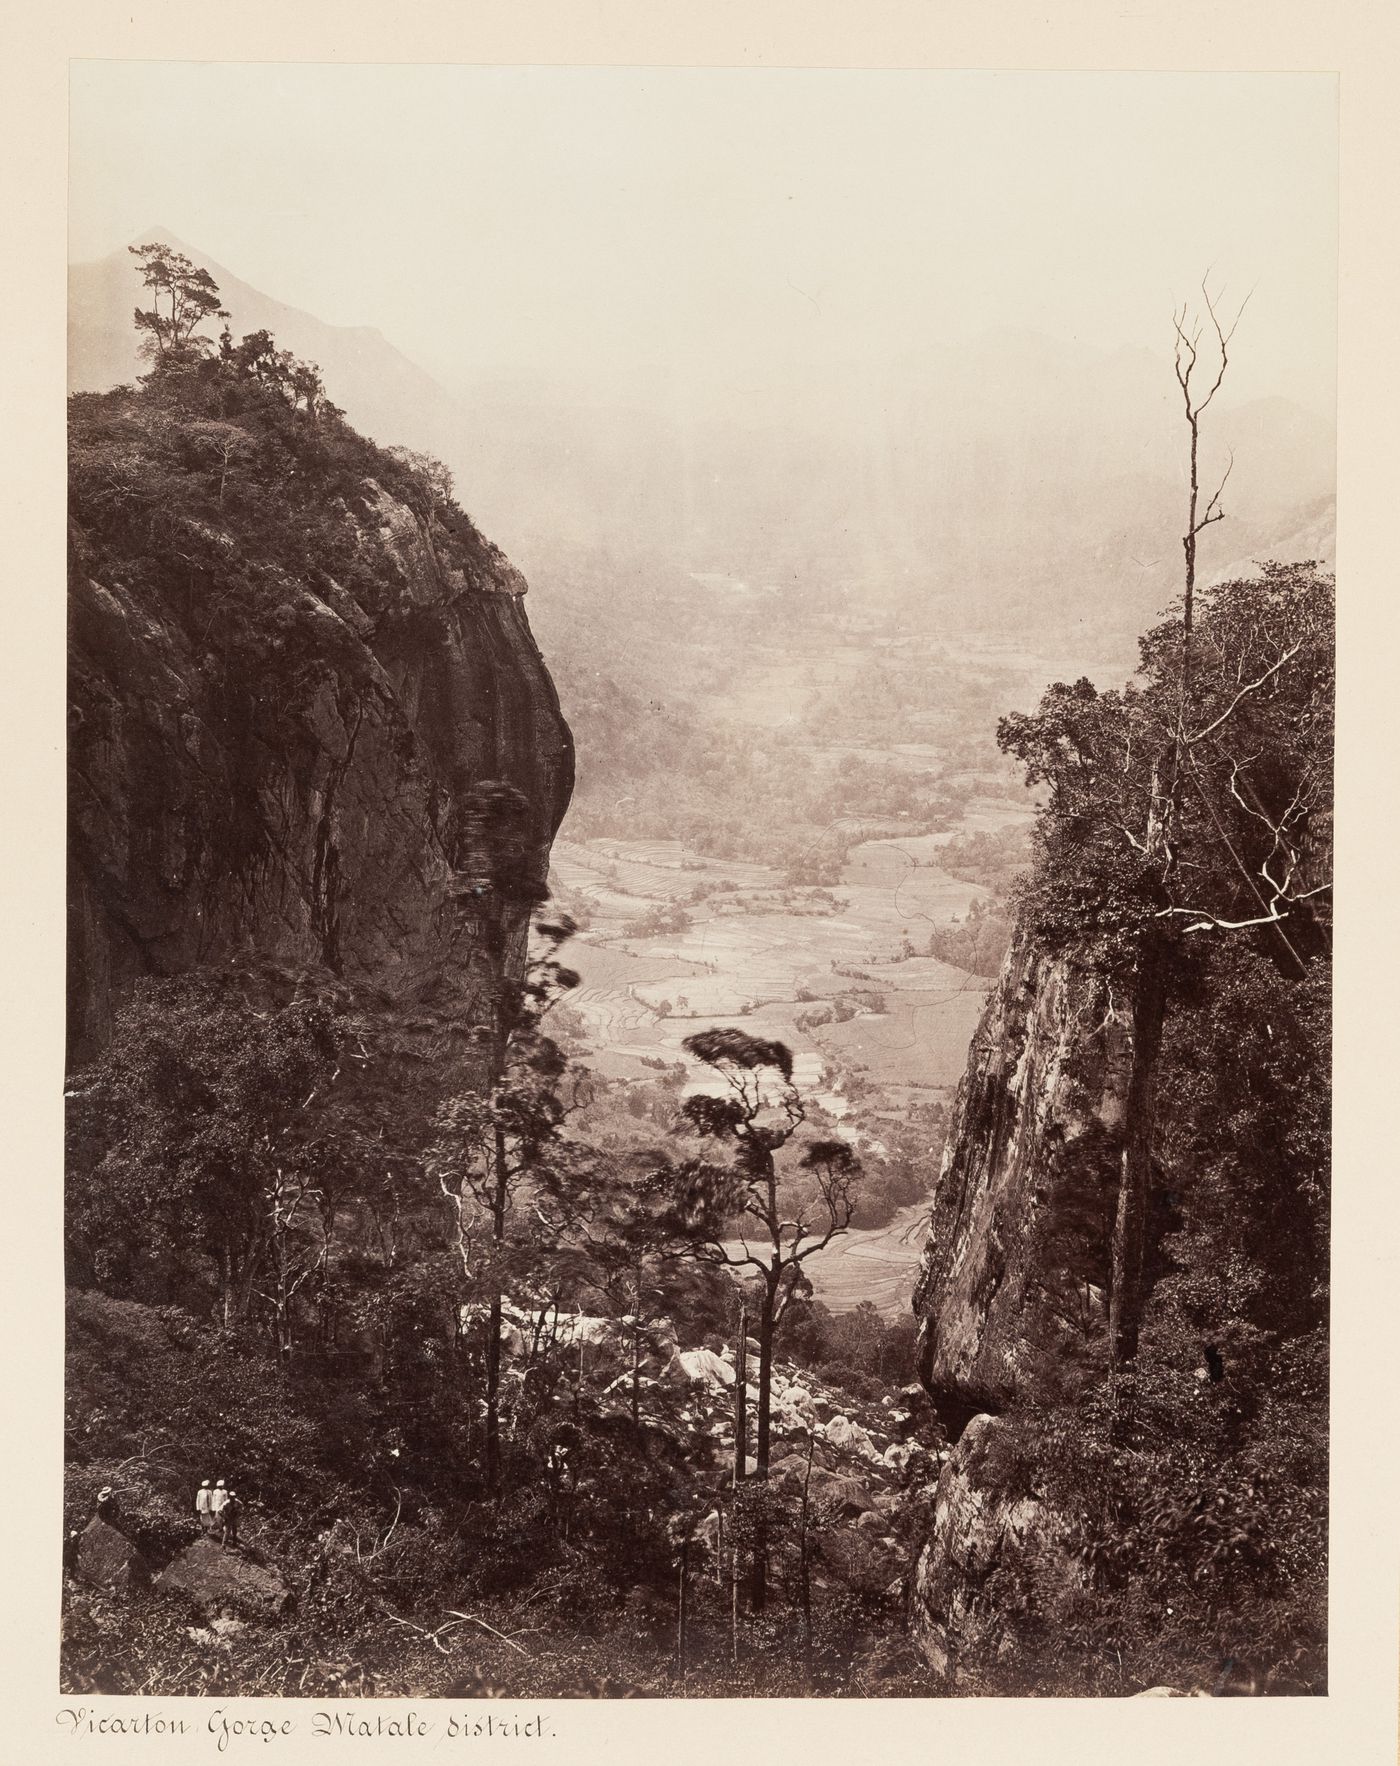 View of Vicarton Gorge, Matale (District), Ceylon (now Sri Lanka)